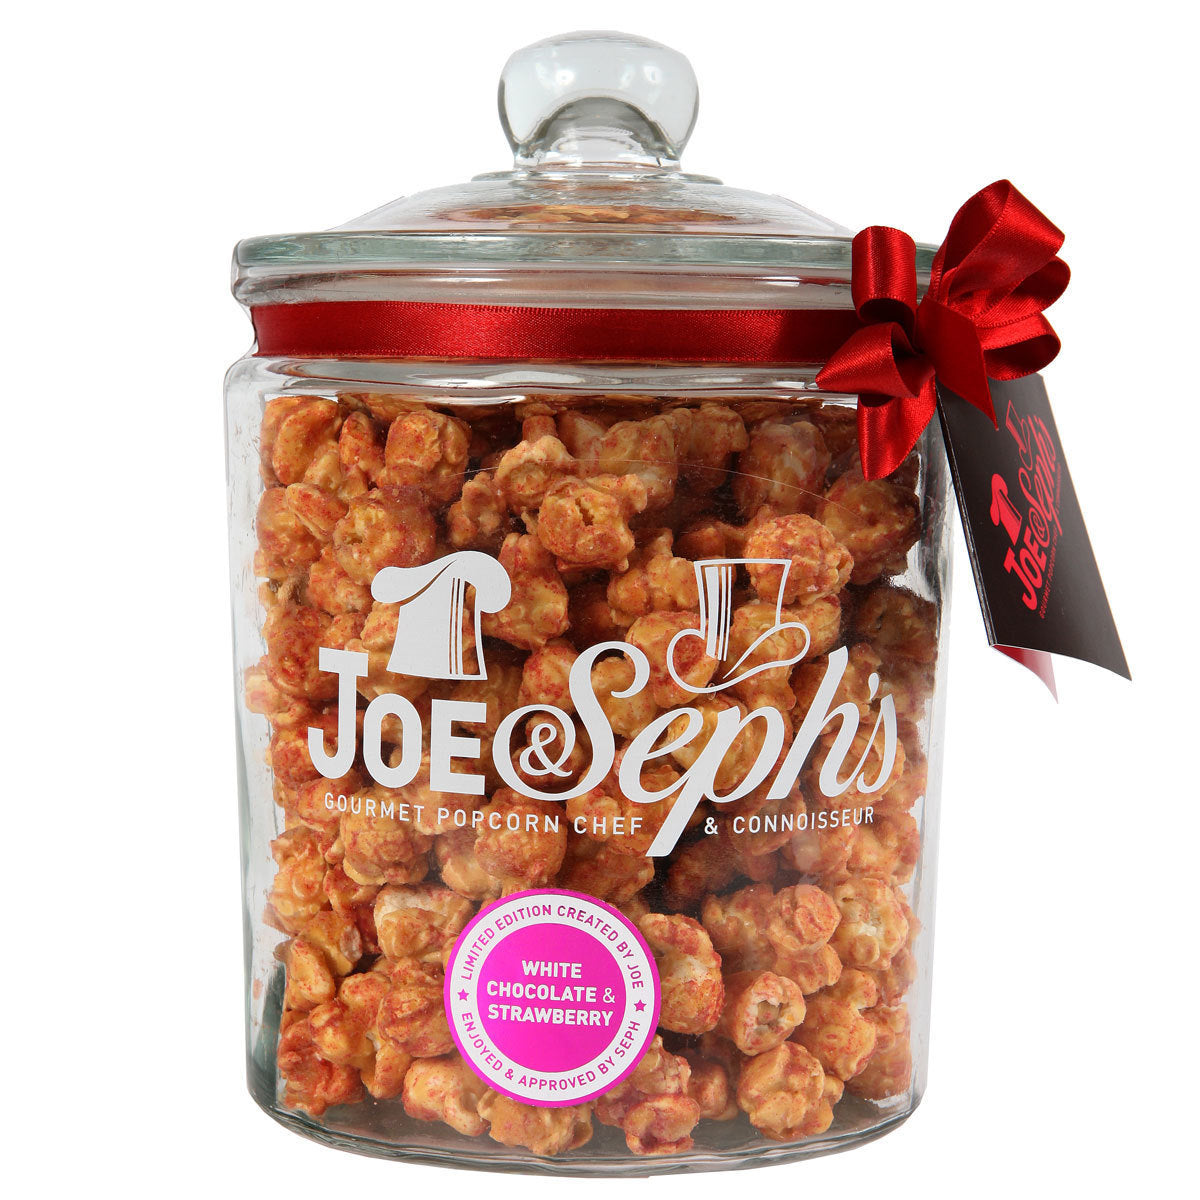 Joe & Seph's Caramel, White Chocolate & Strawberry Gourmet Popcorn Gift Jar, 300g Snacks Costco UK   